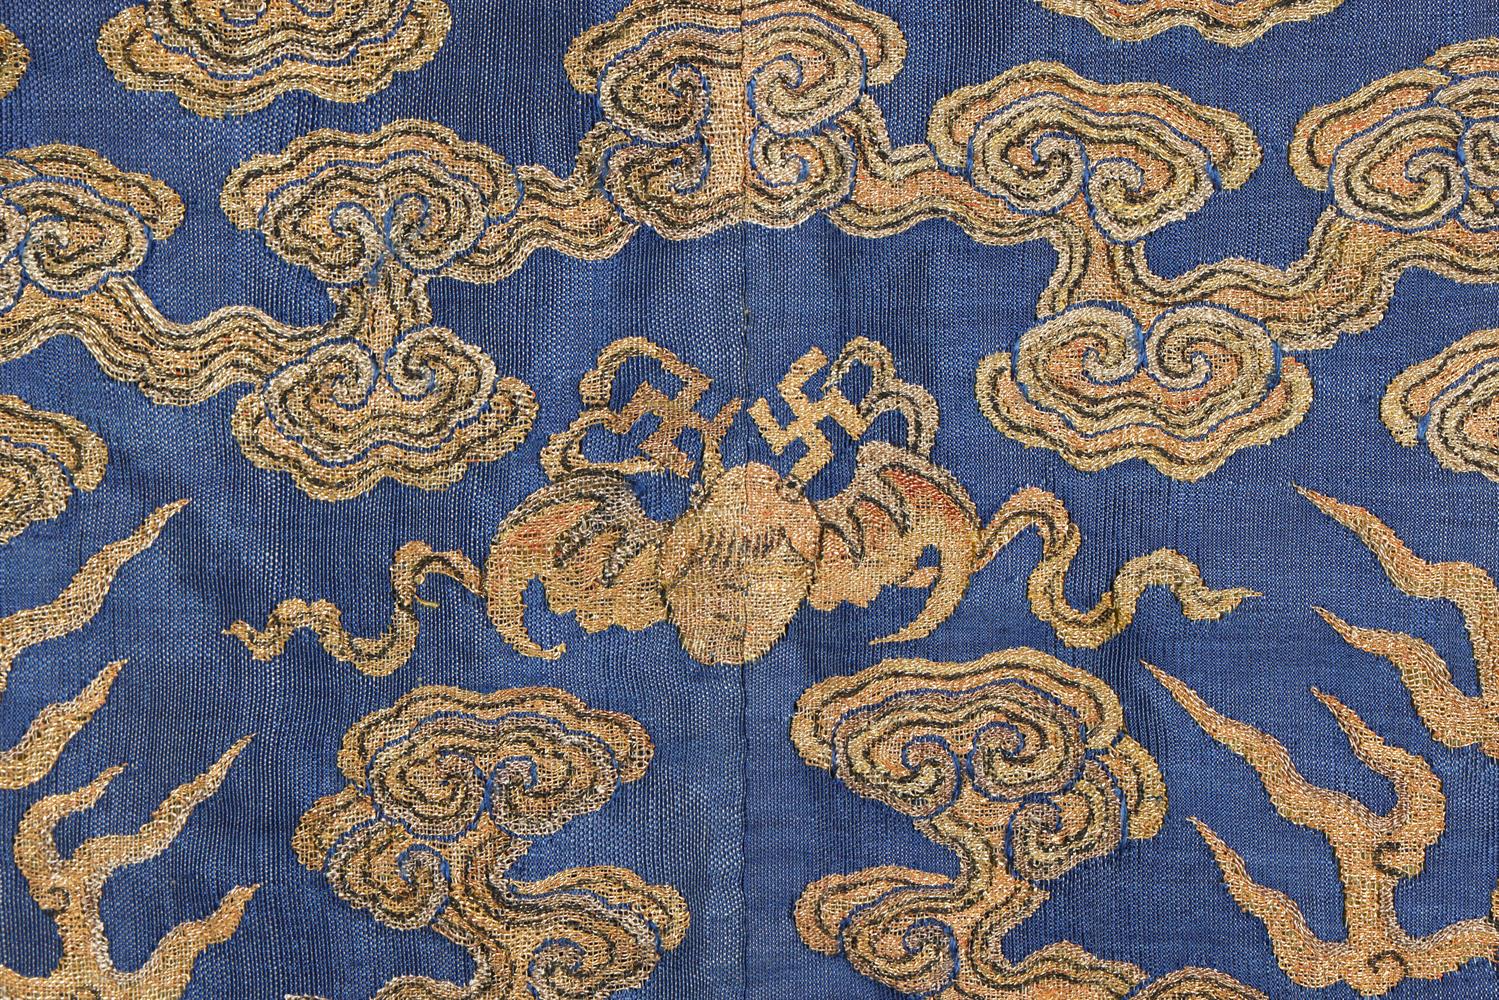 A rare Imperial 'twelve symbol' blue silk dragon robe - Image 12 of 37